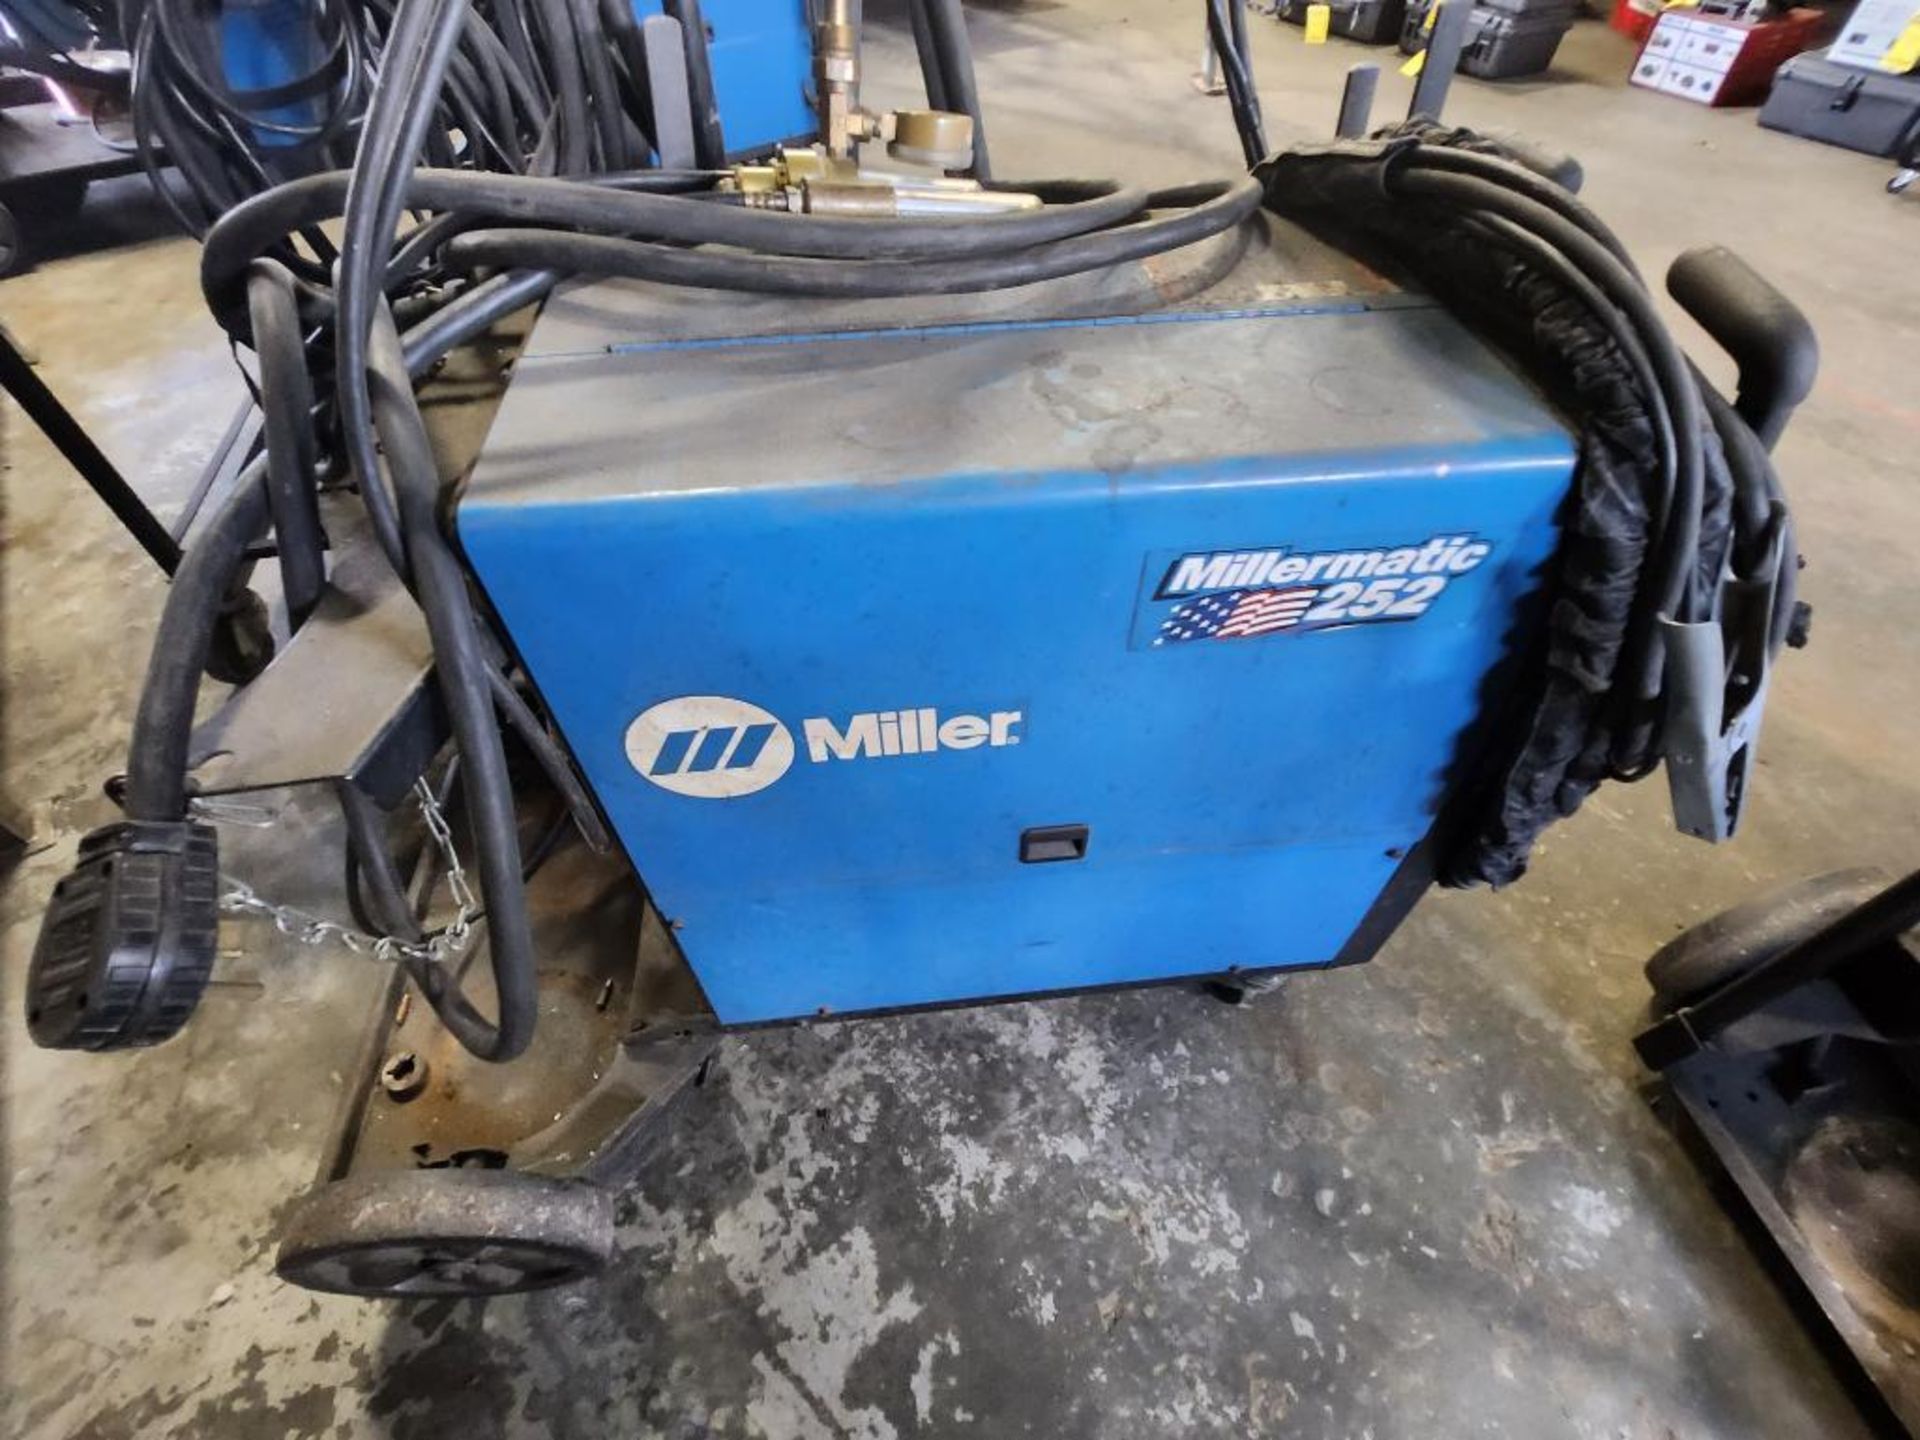 Miller Millermatic 252 Wire Feeder Welder, w/ Miller Spoolmatic 30A - Image 5 of 6